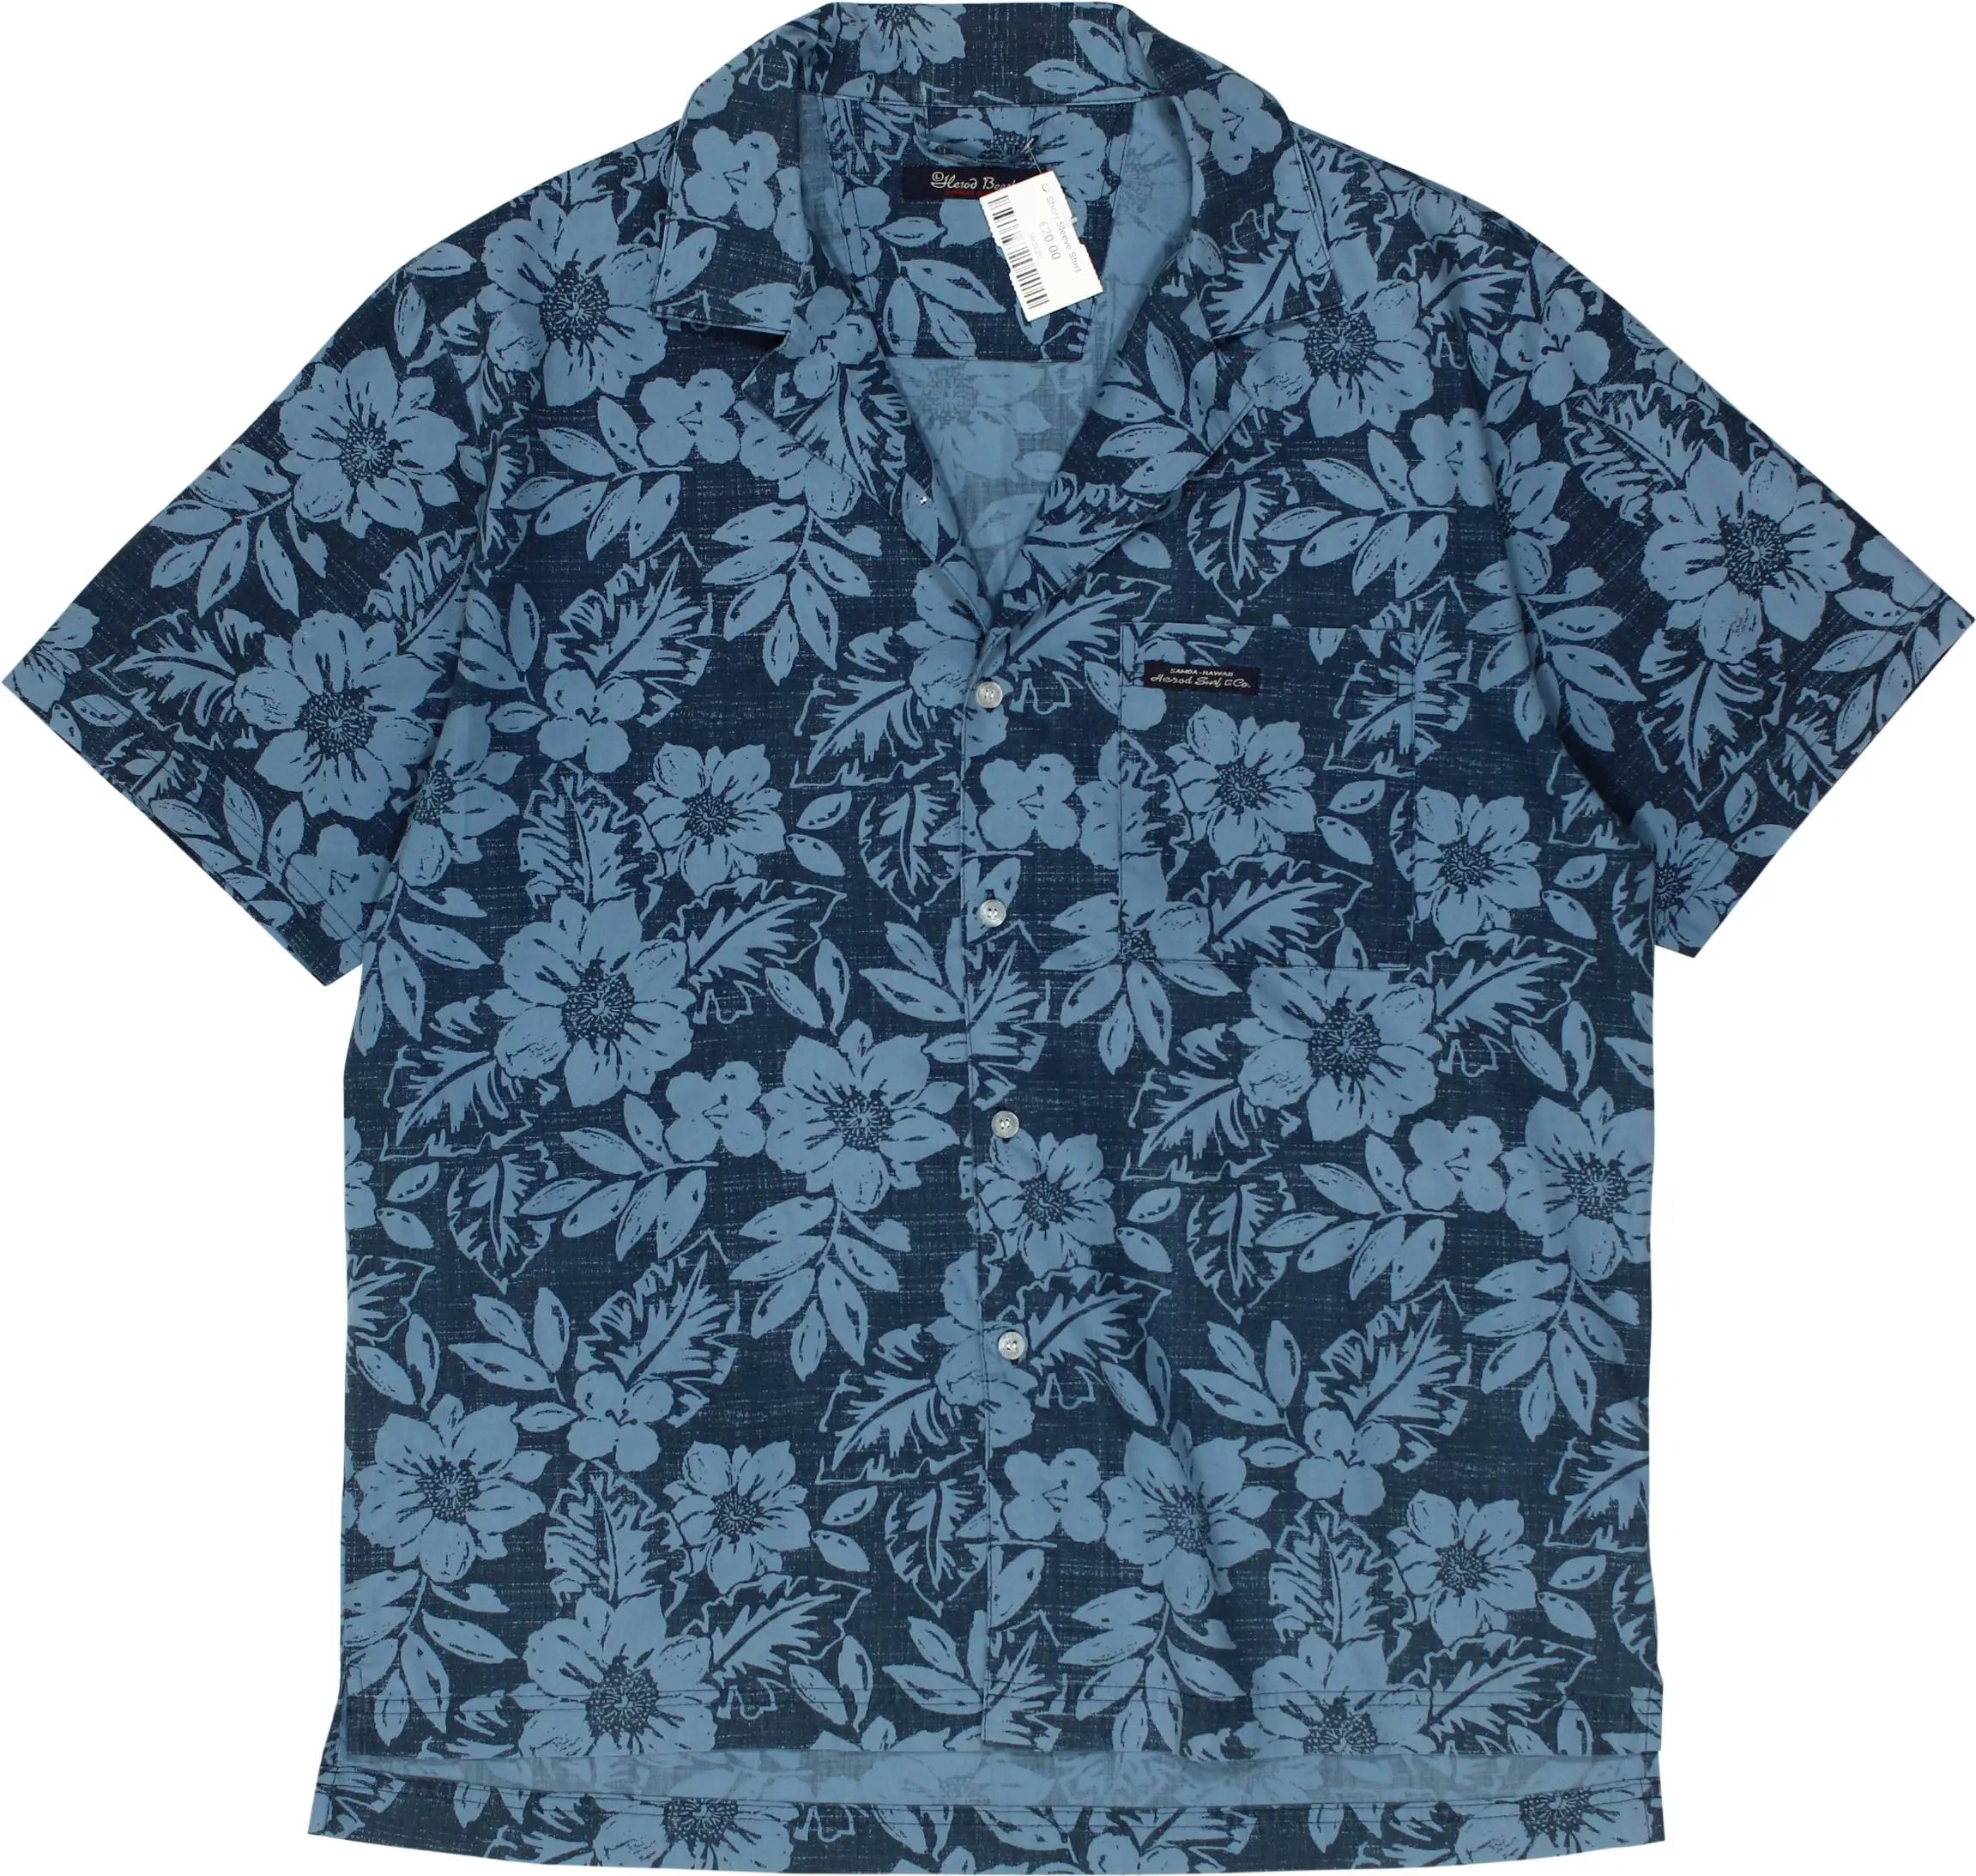 Hetod Beach - Hawaiian Shirt- ThriftTale.com - Vintage and second handclothing